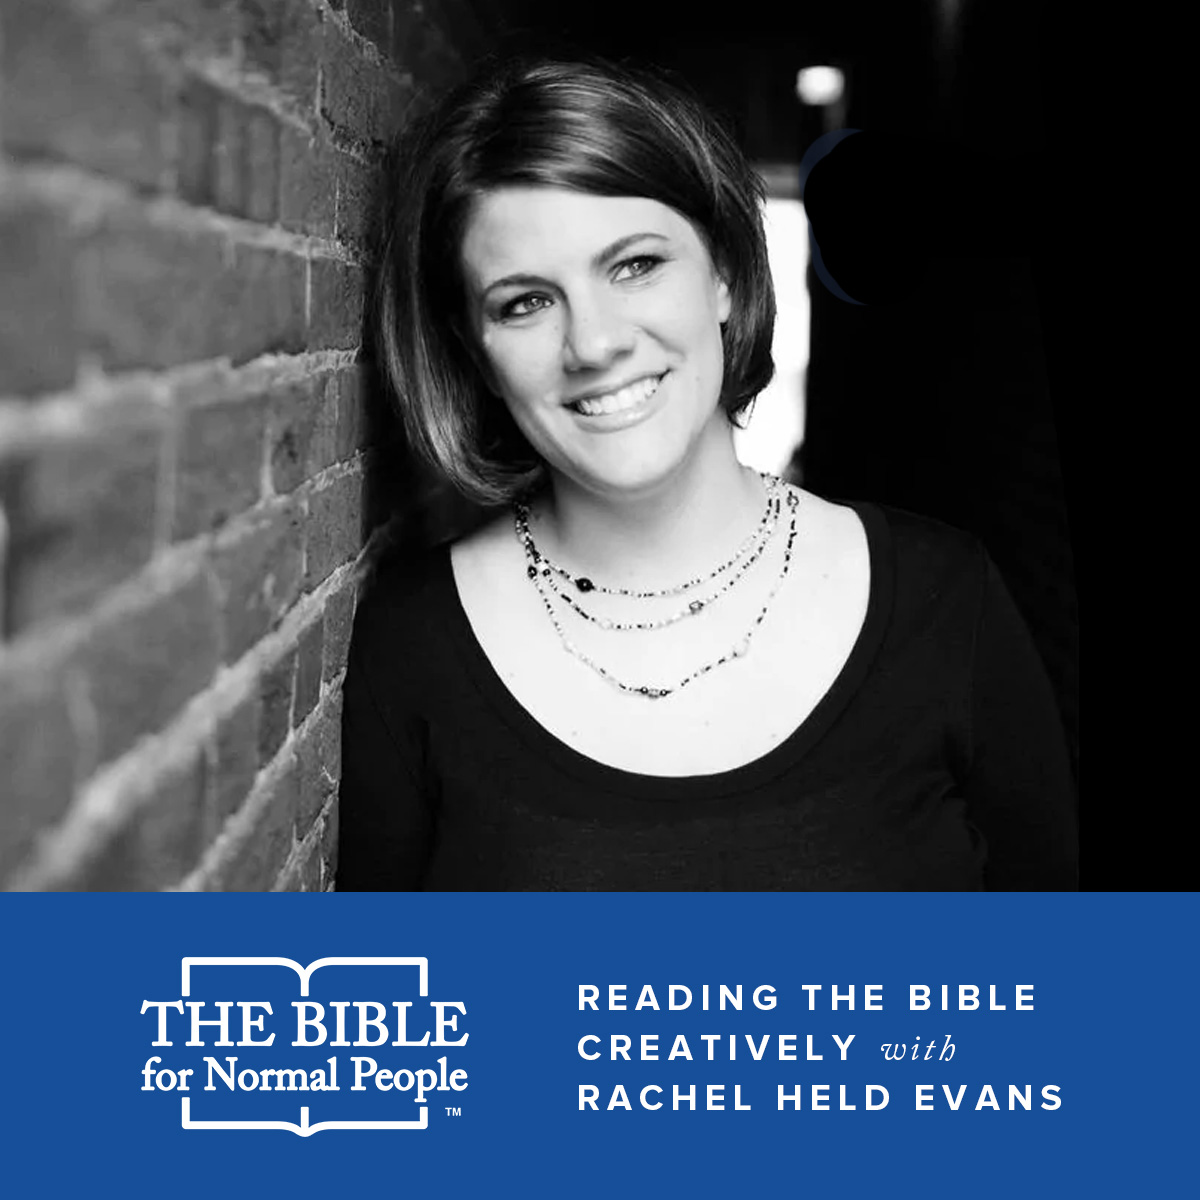 Rachel Held Evans: Reading The Bible Creatively